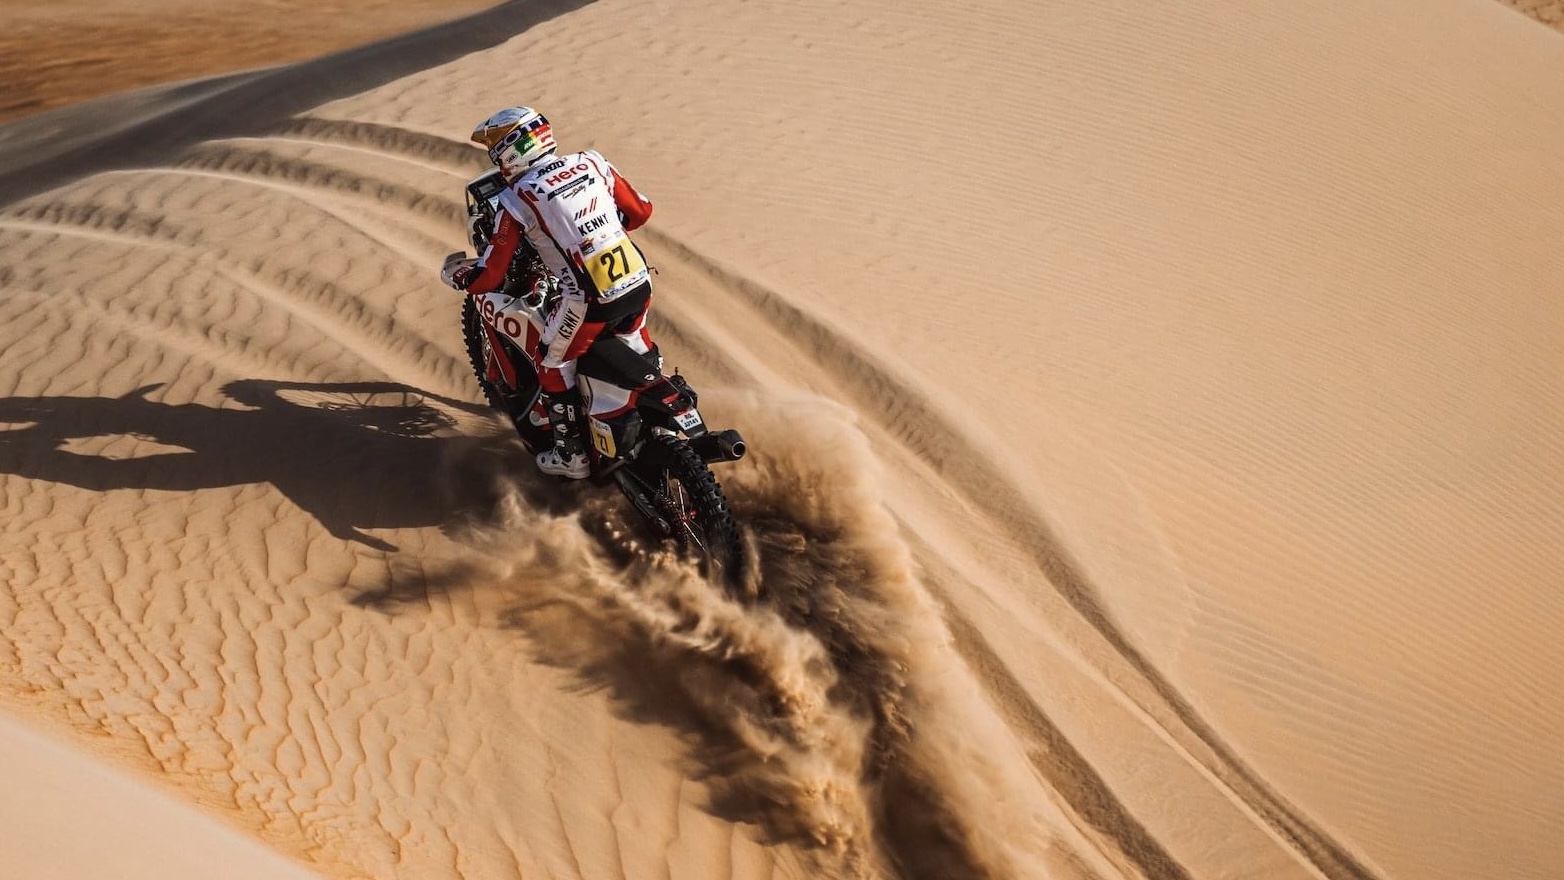 Joaquim Rodrigues, Abu Dhabi, Etapa 4: “Saltei longo numa duna, parti os óculos e comecei a sangrar do nariz” thumbnail